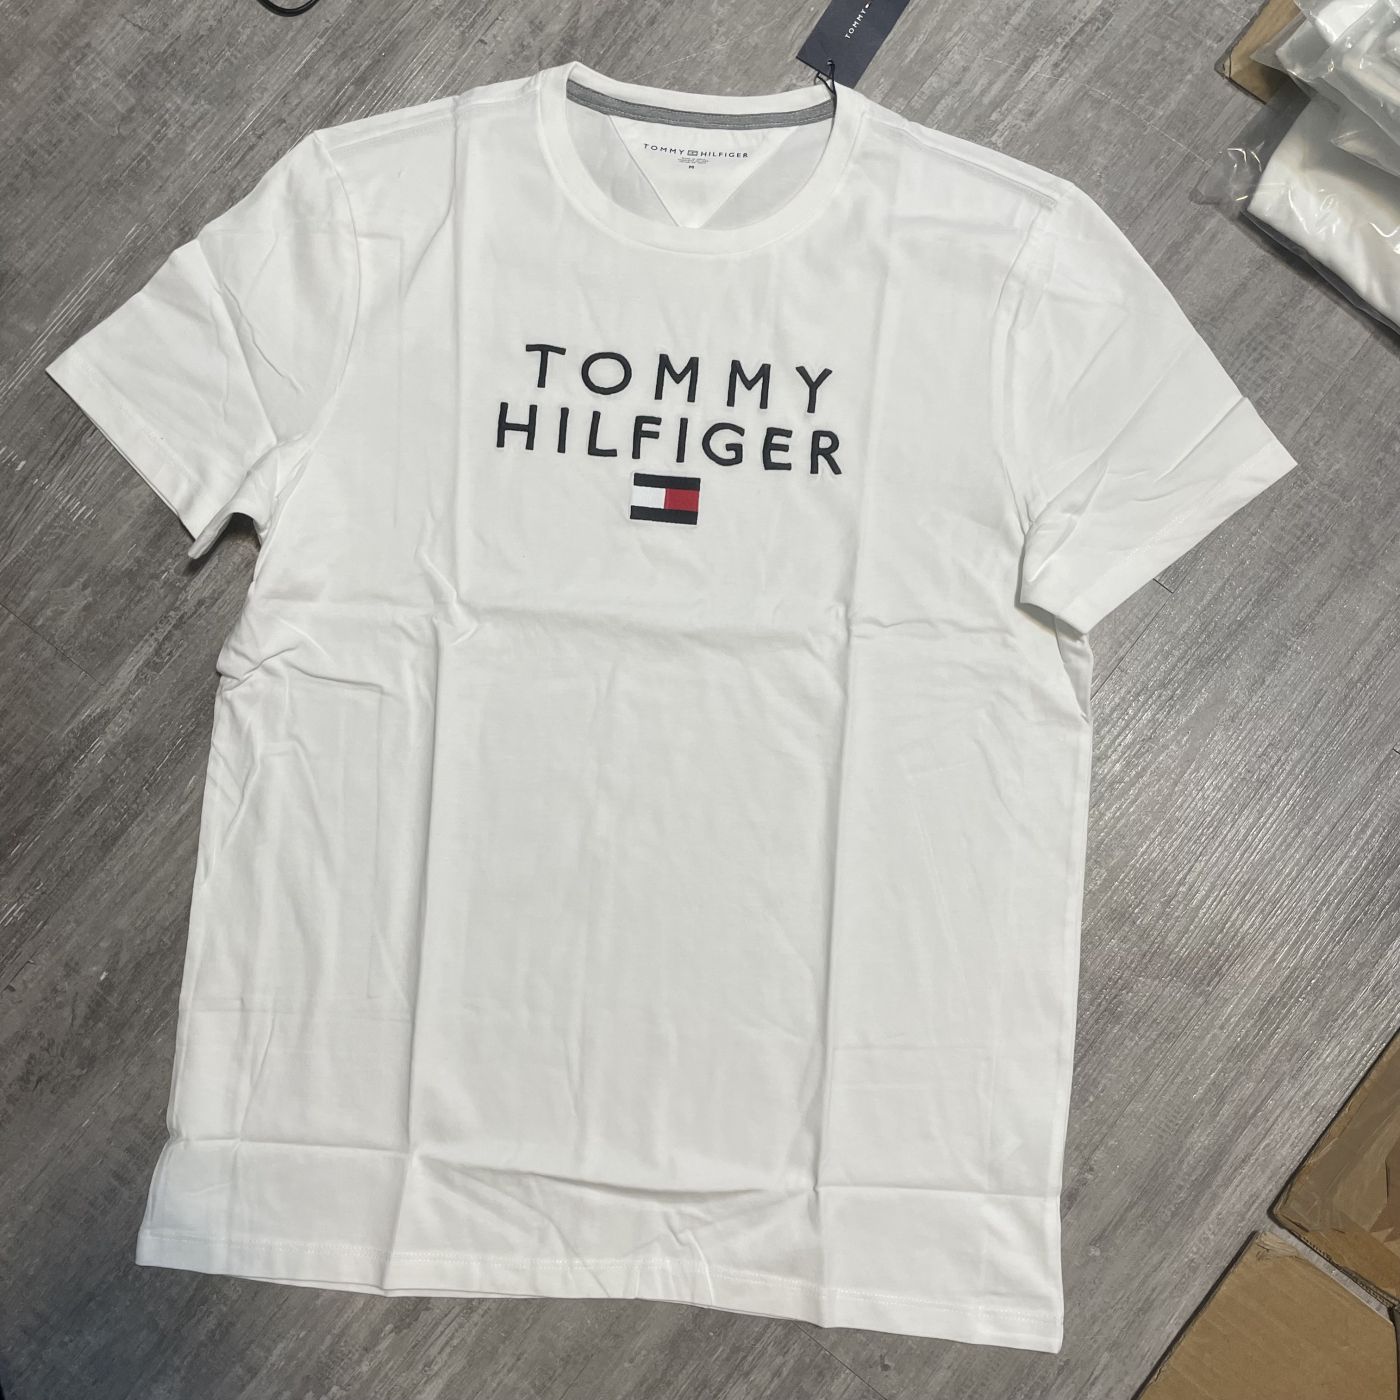 Tommy hilfiget t shirt